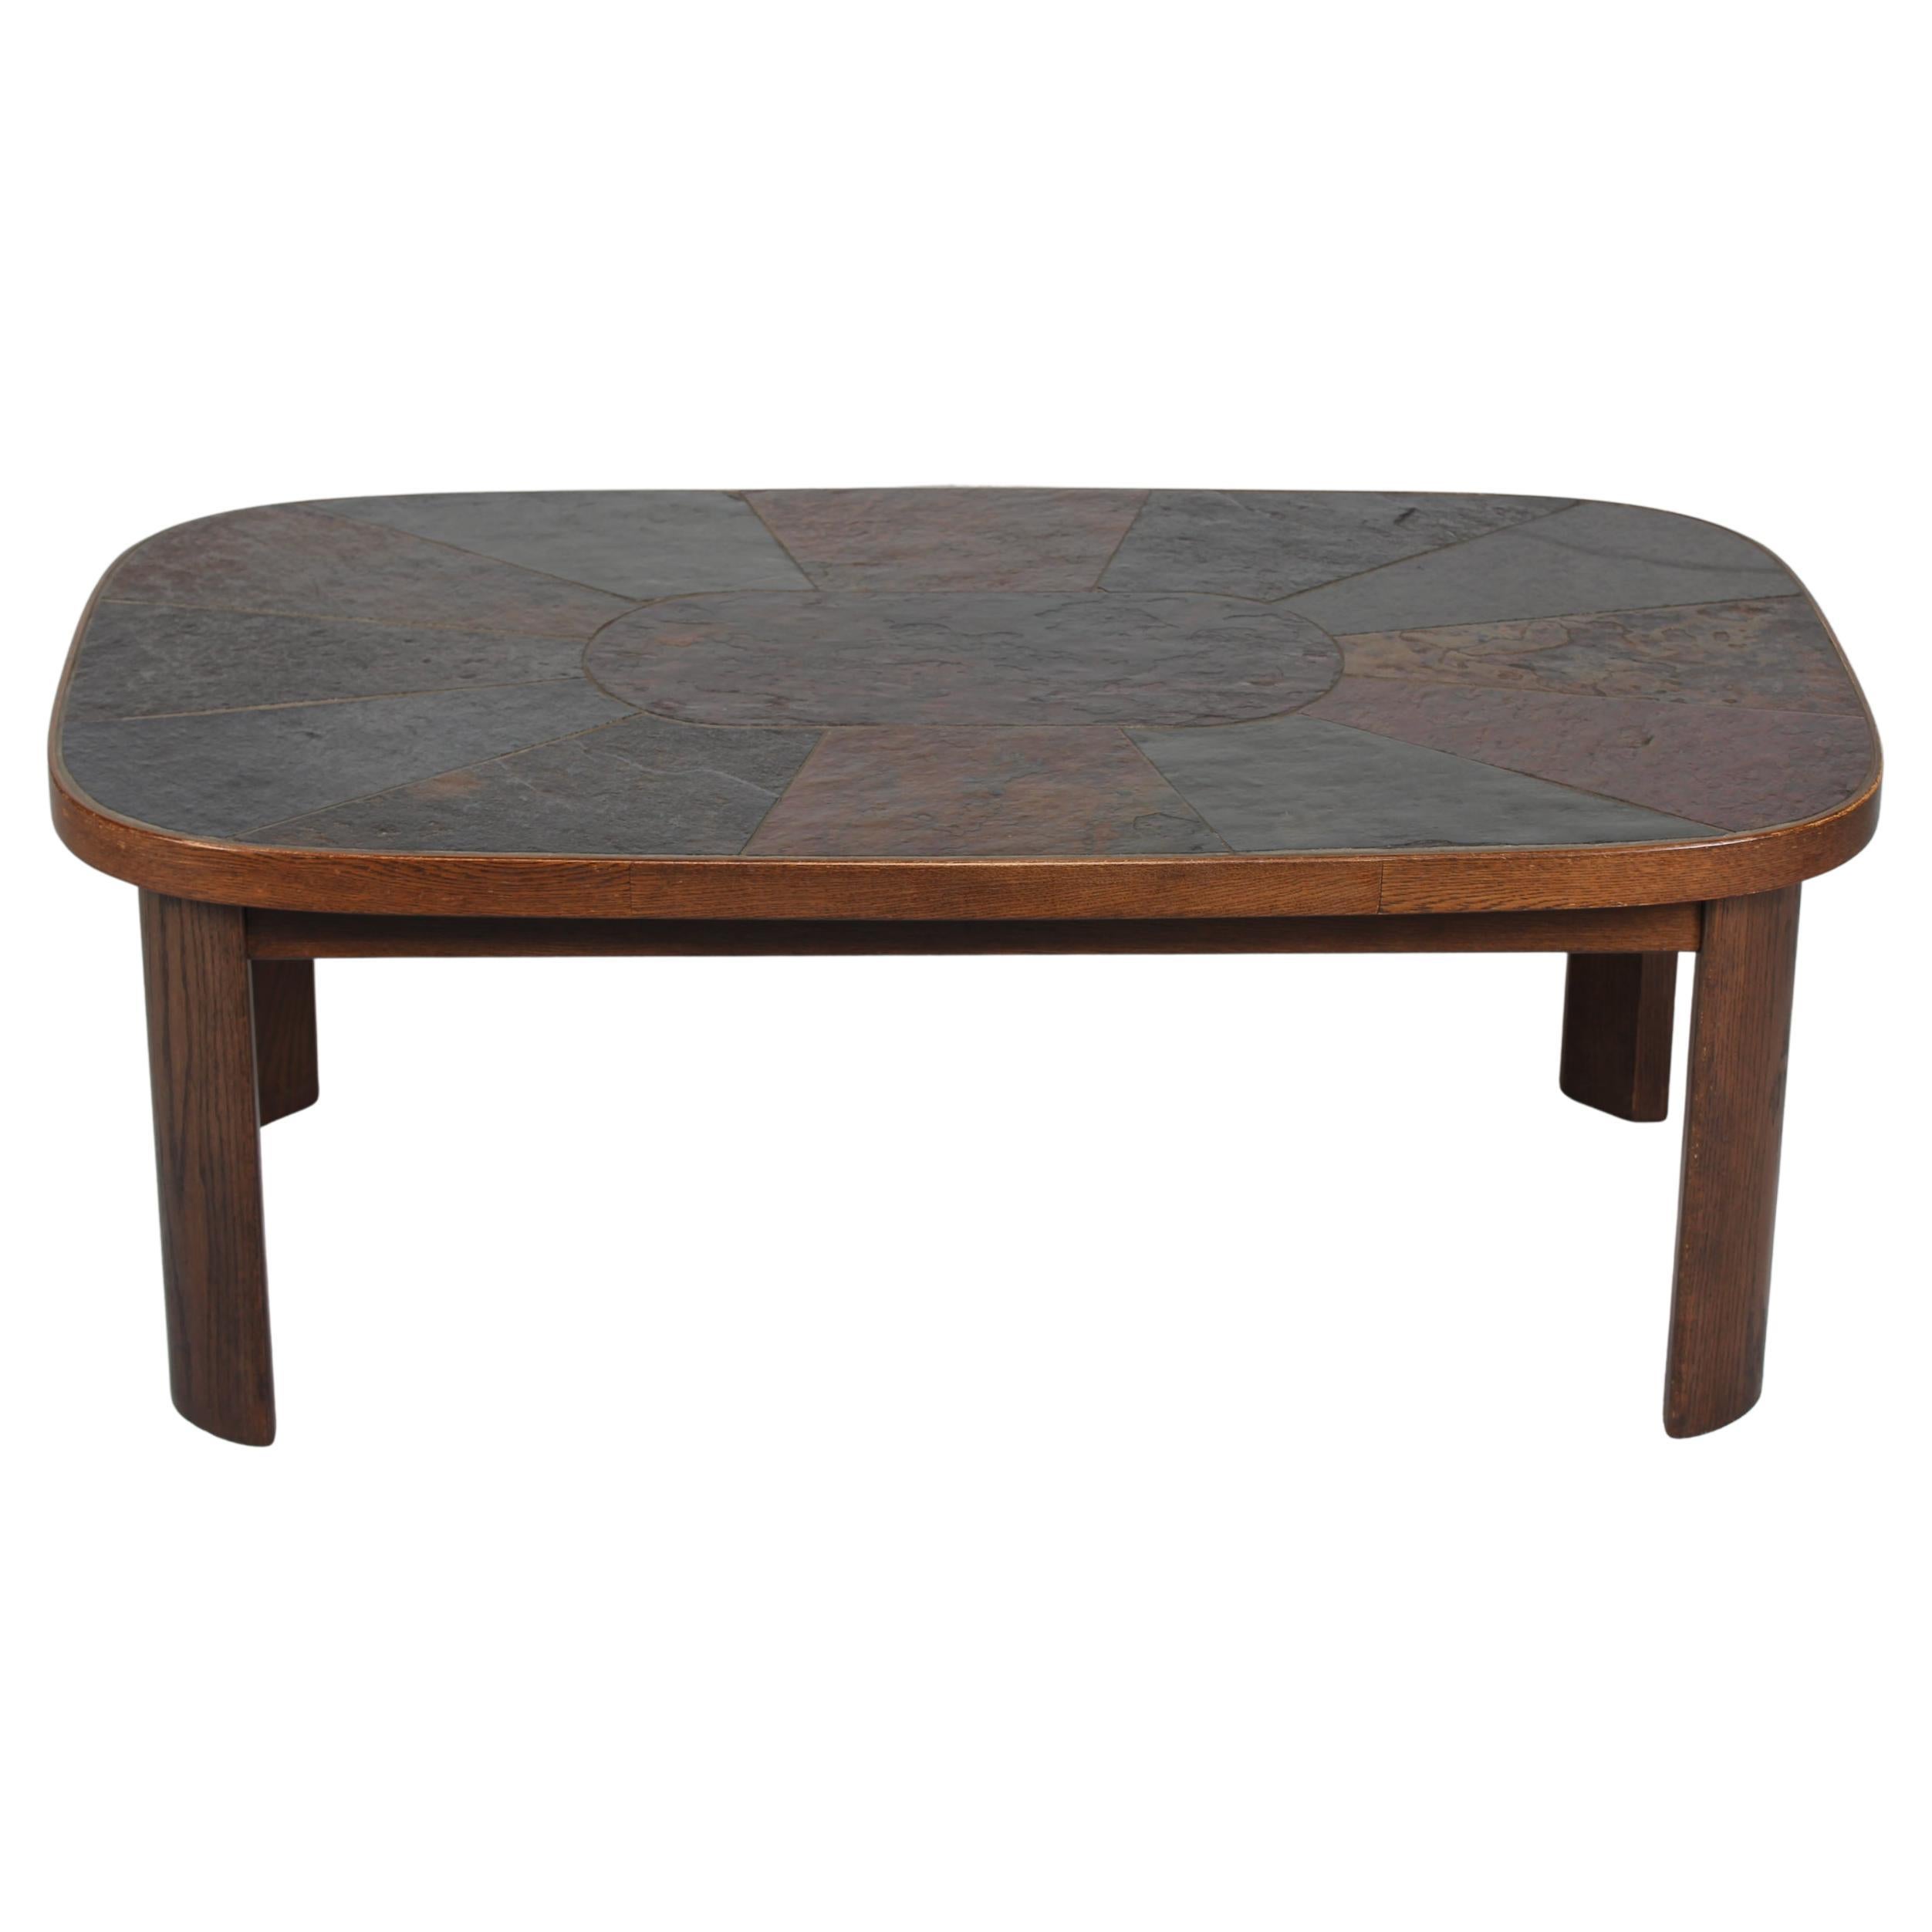 dark stained oak table